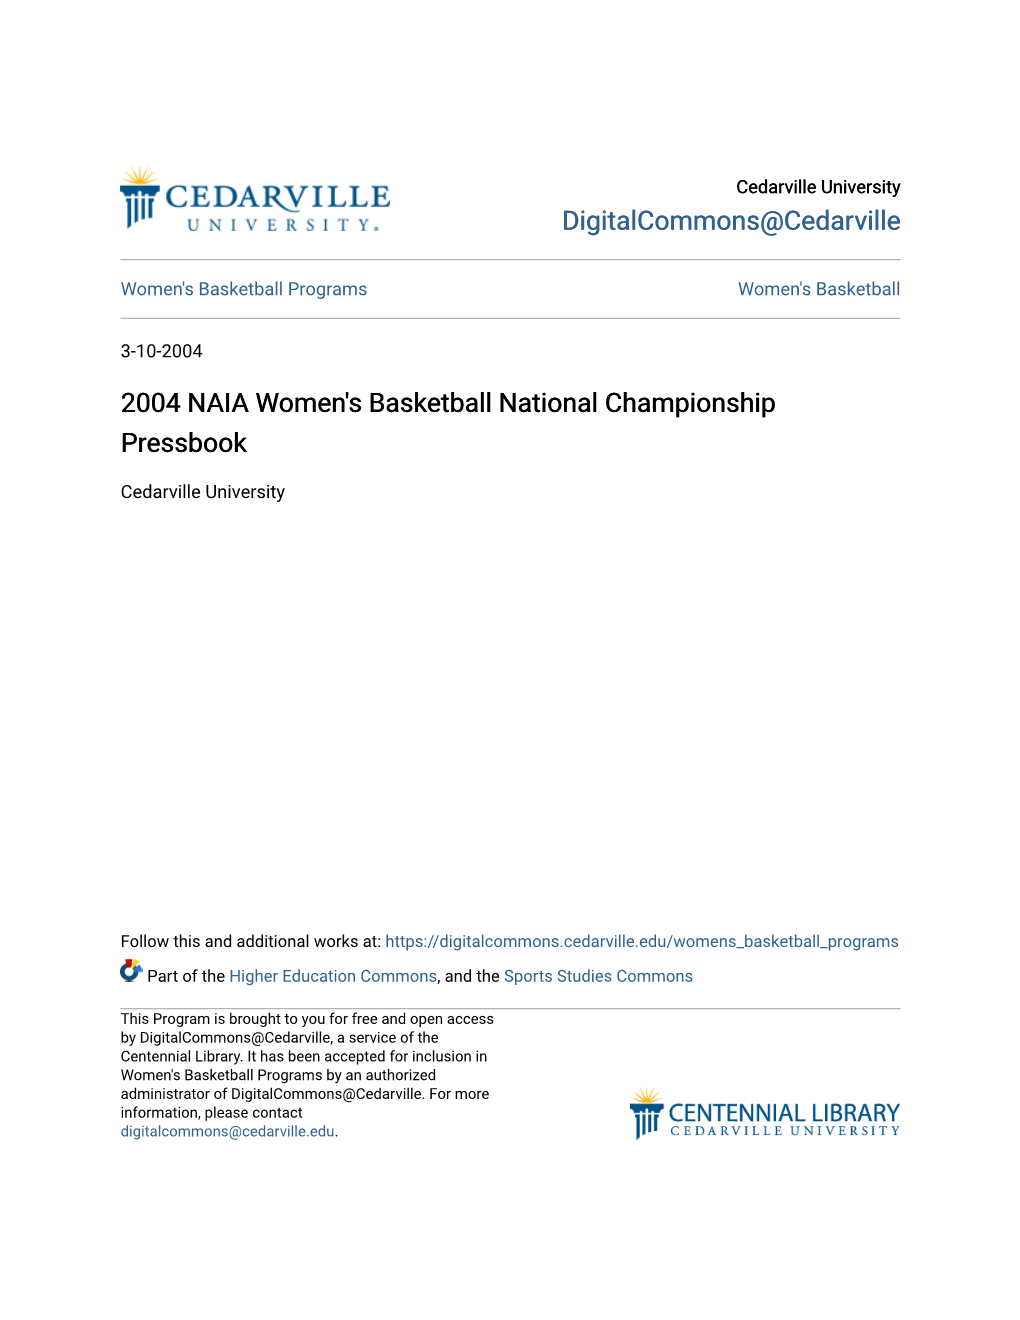 2004 NAIA Women's Basketball National Championship Pressbook